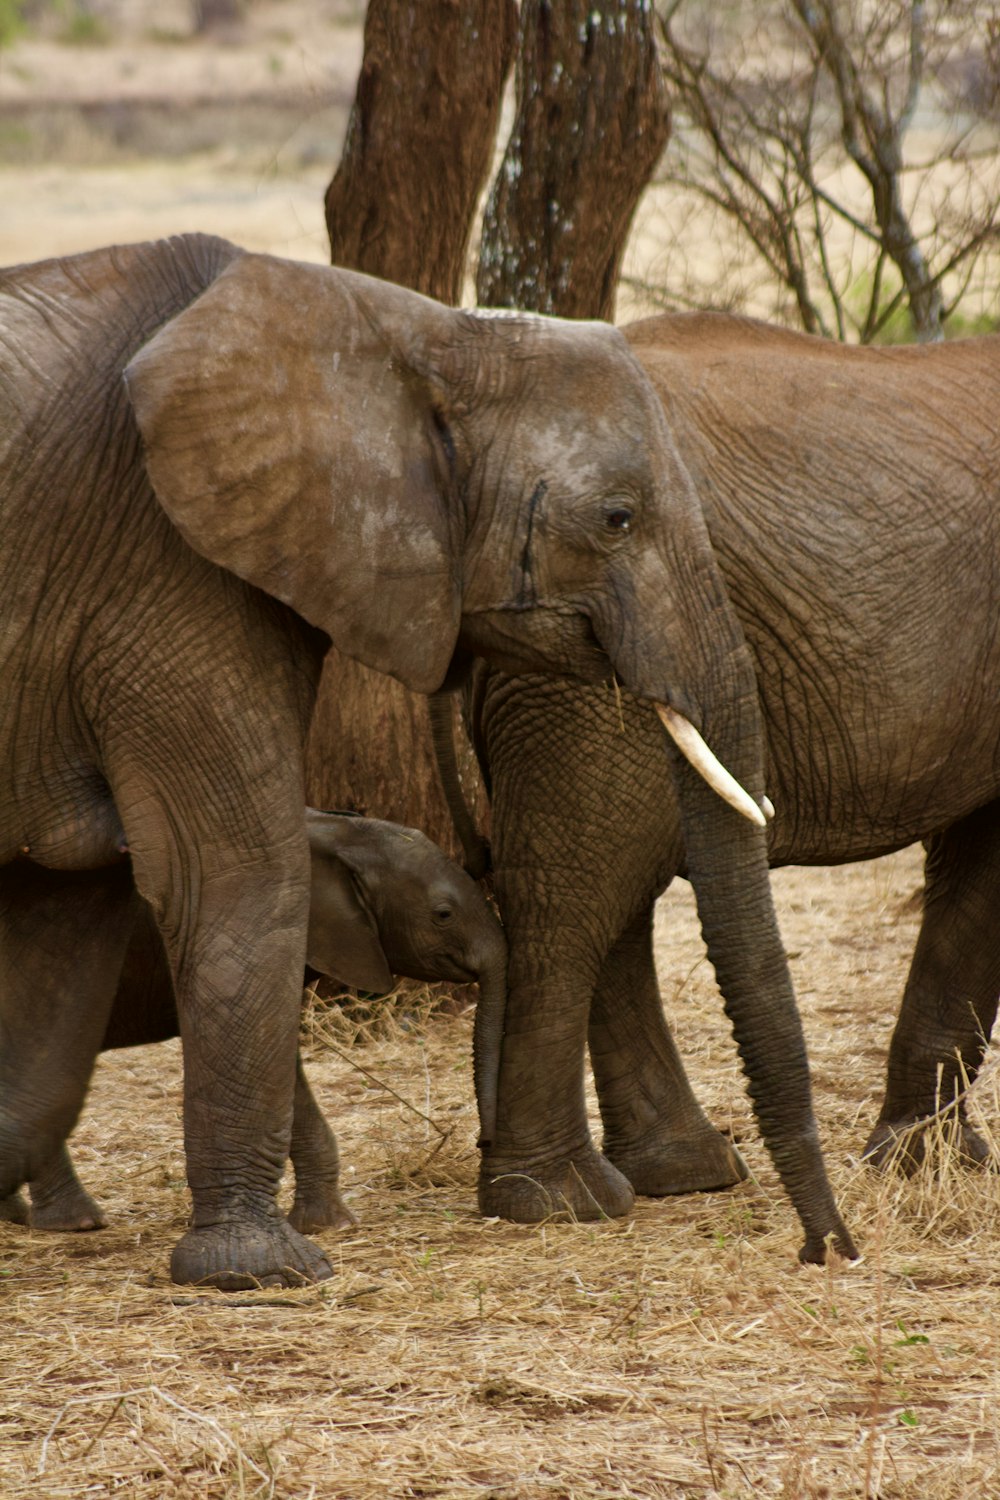 a baby elephant walks next to an adult elephant